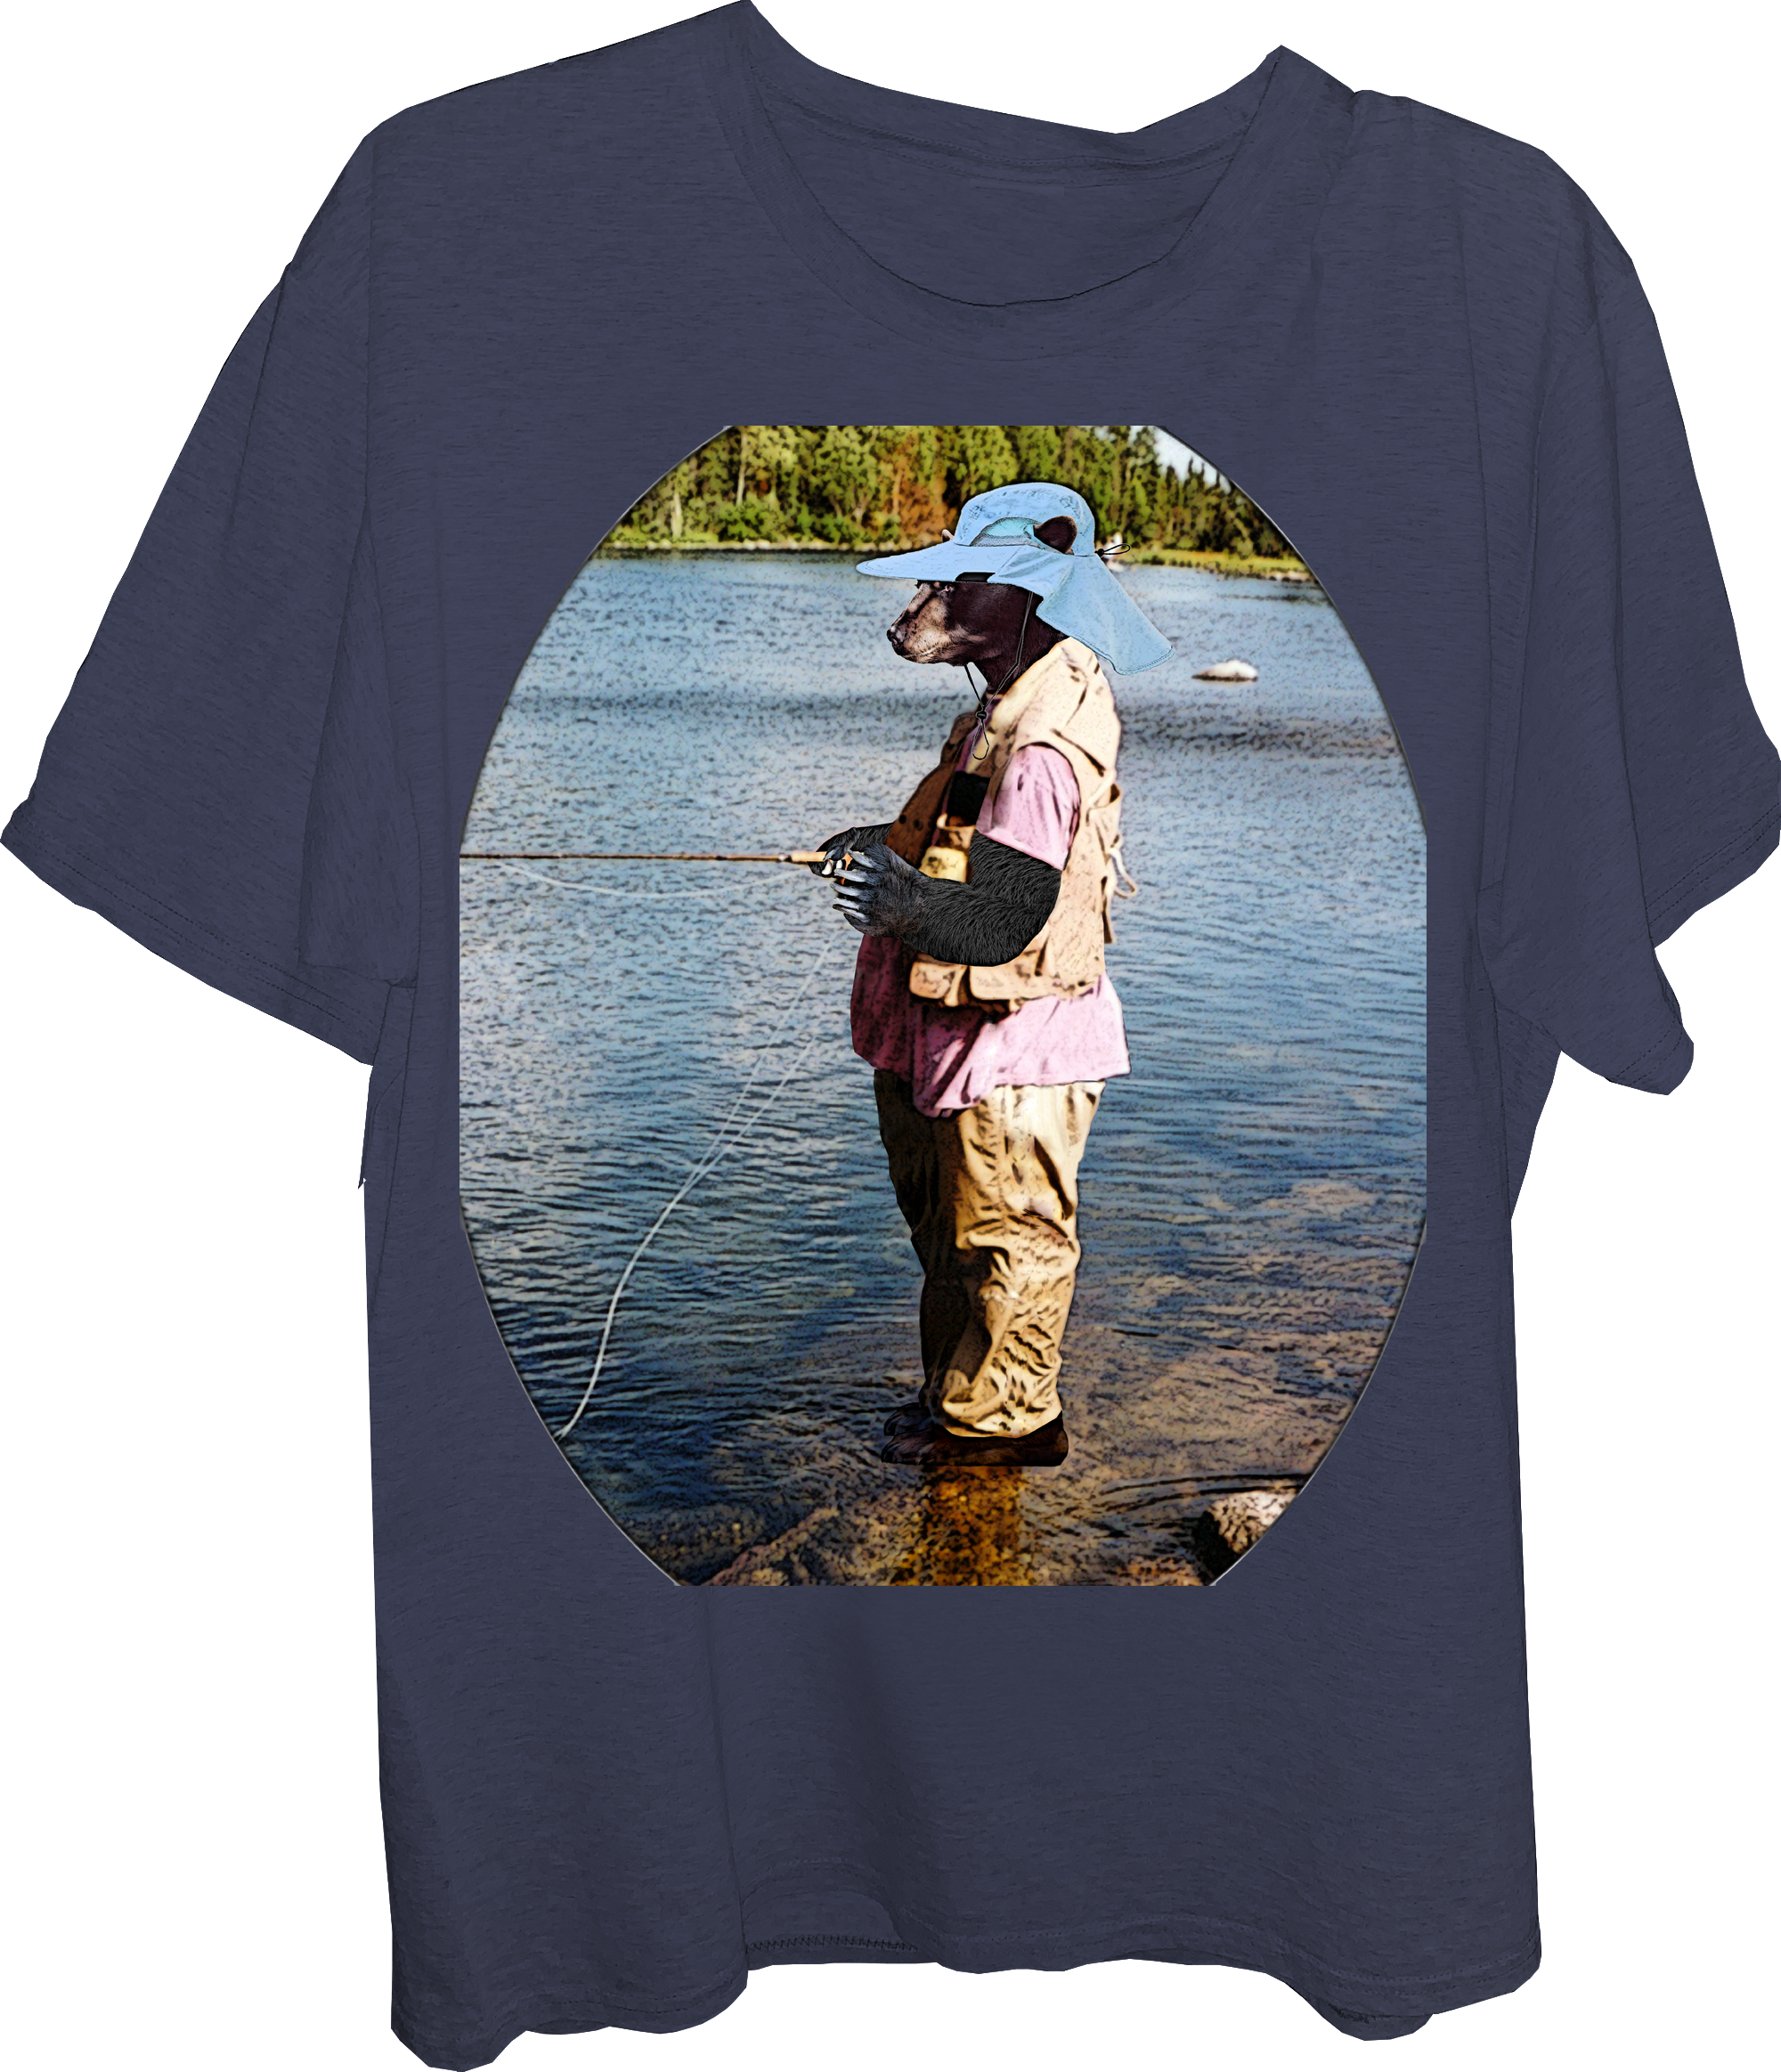 https://www.behrbonesclothing.com/wp-content/uploads/2019/07/Bear-Fly-Fishing-T-shirt-2000.png